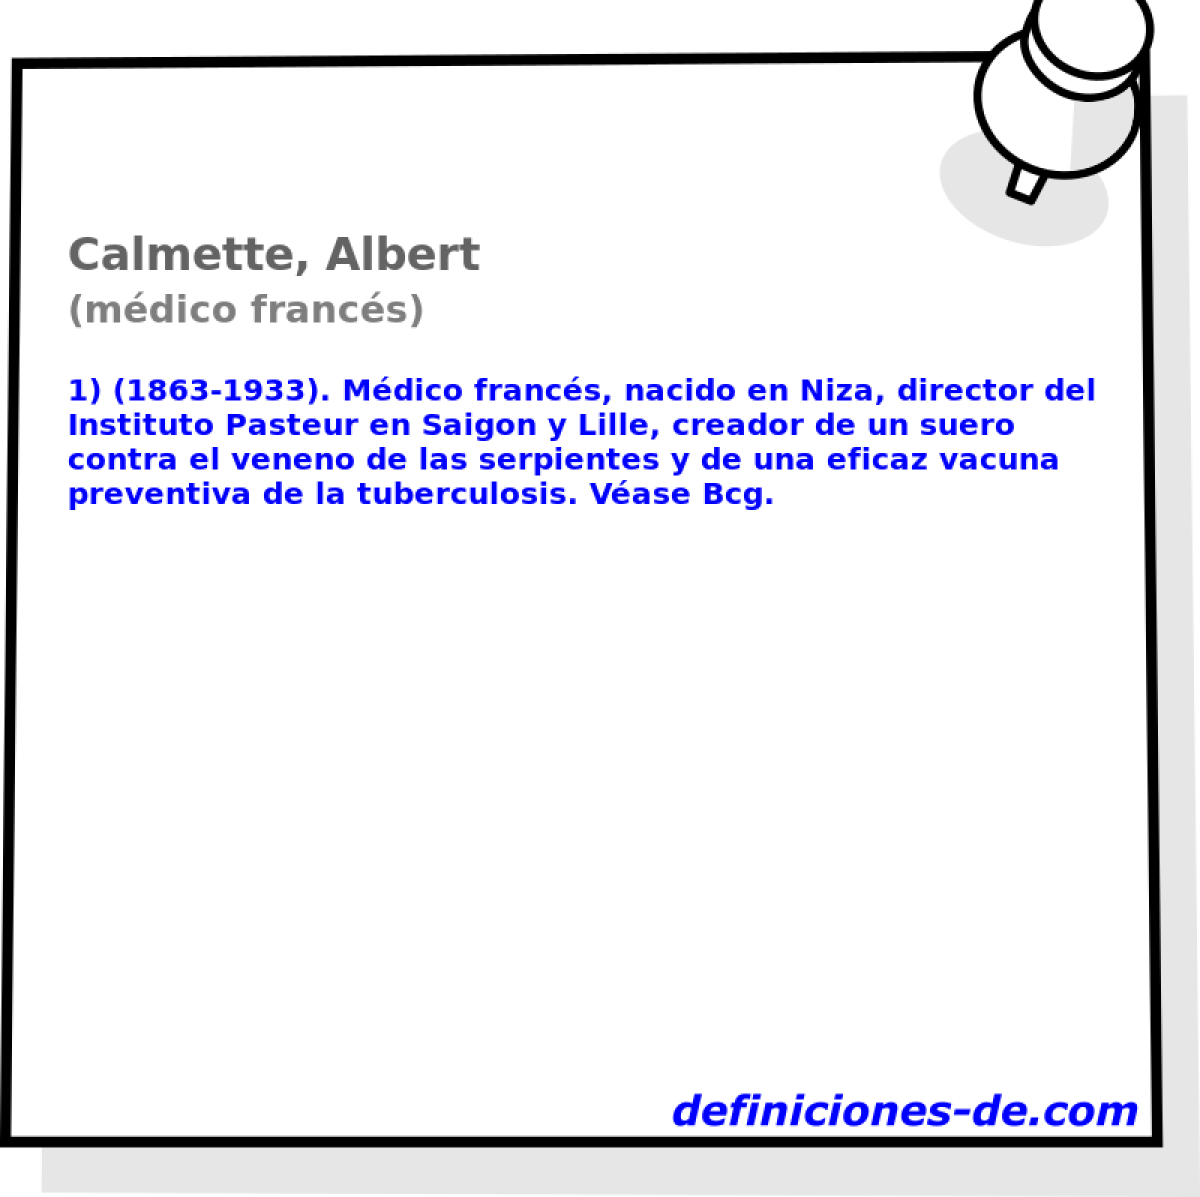 Calmette, Albert (mdico francs)